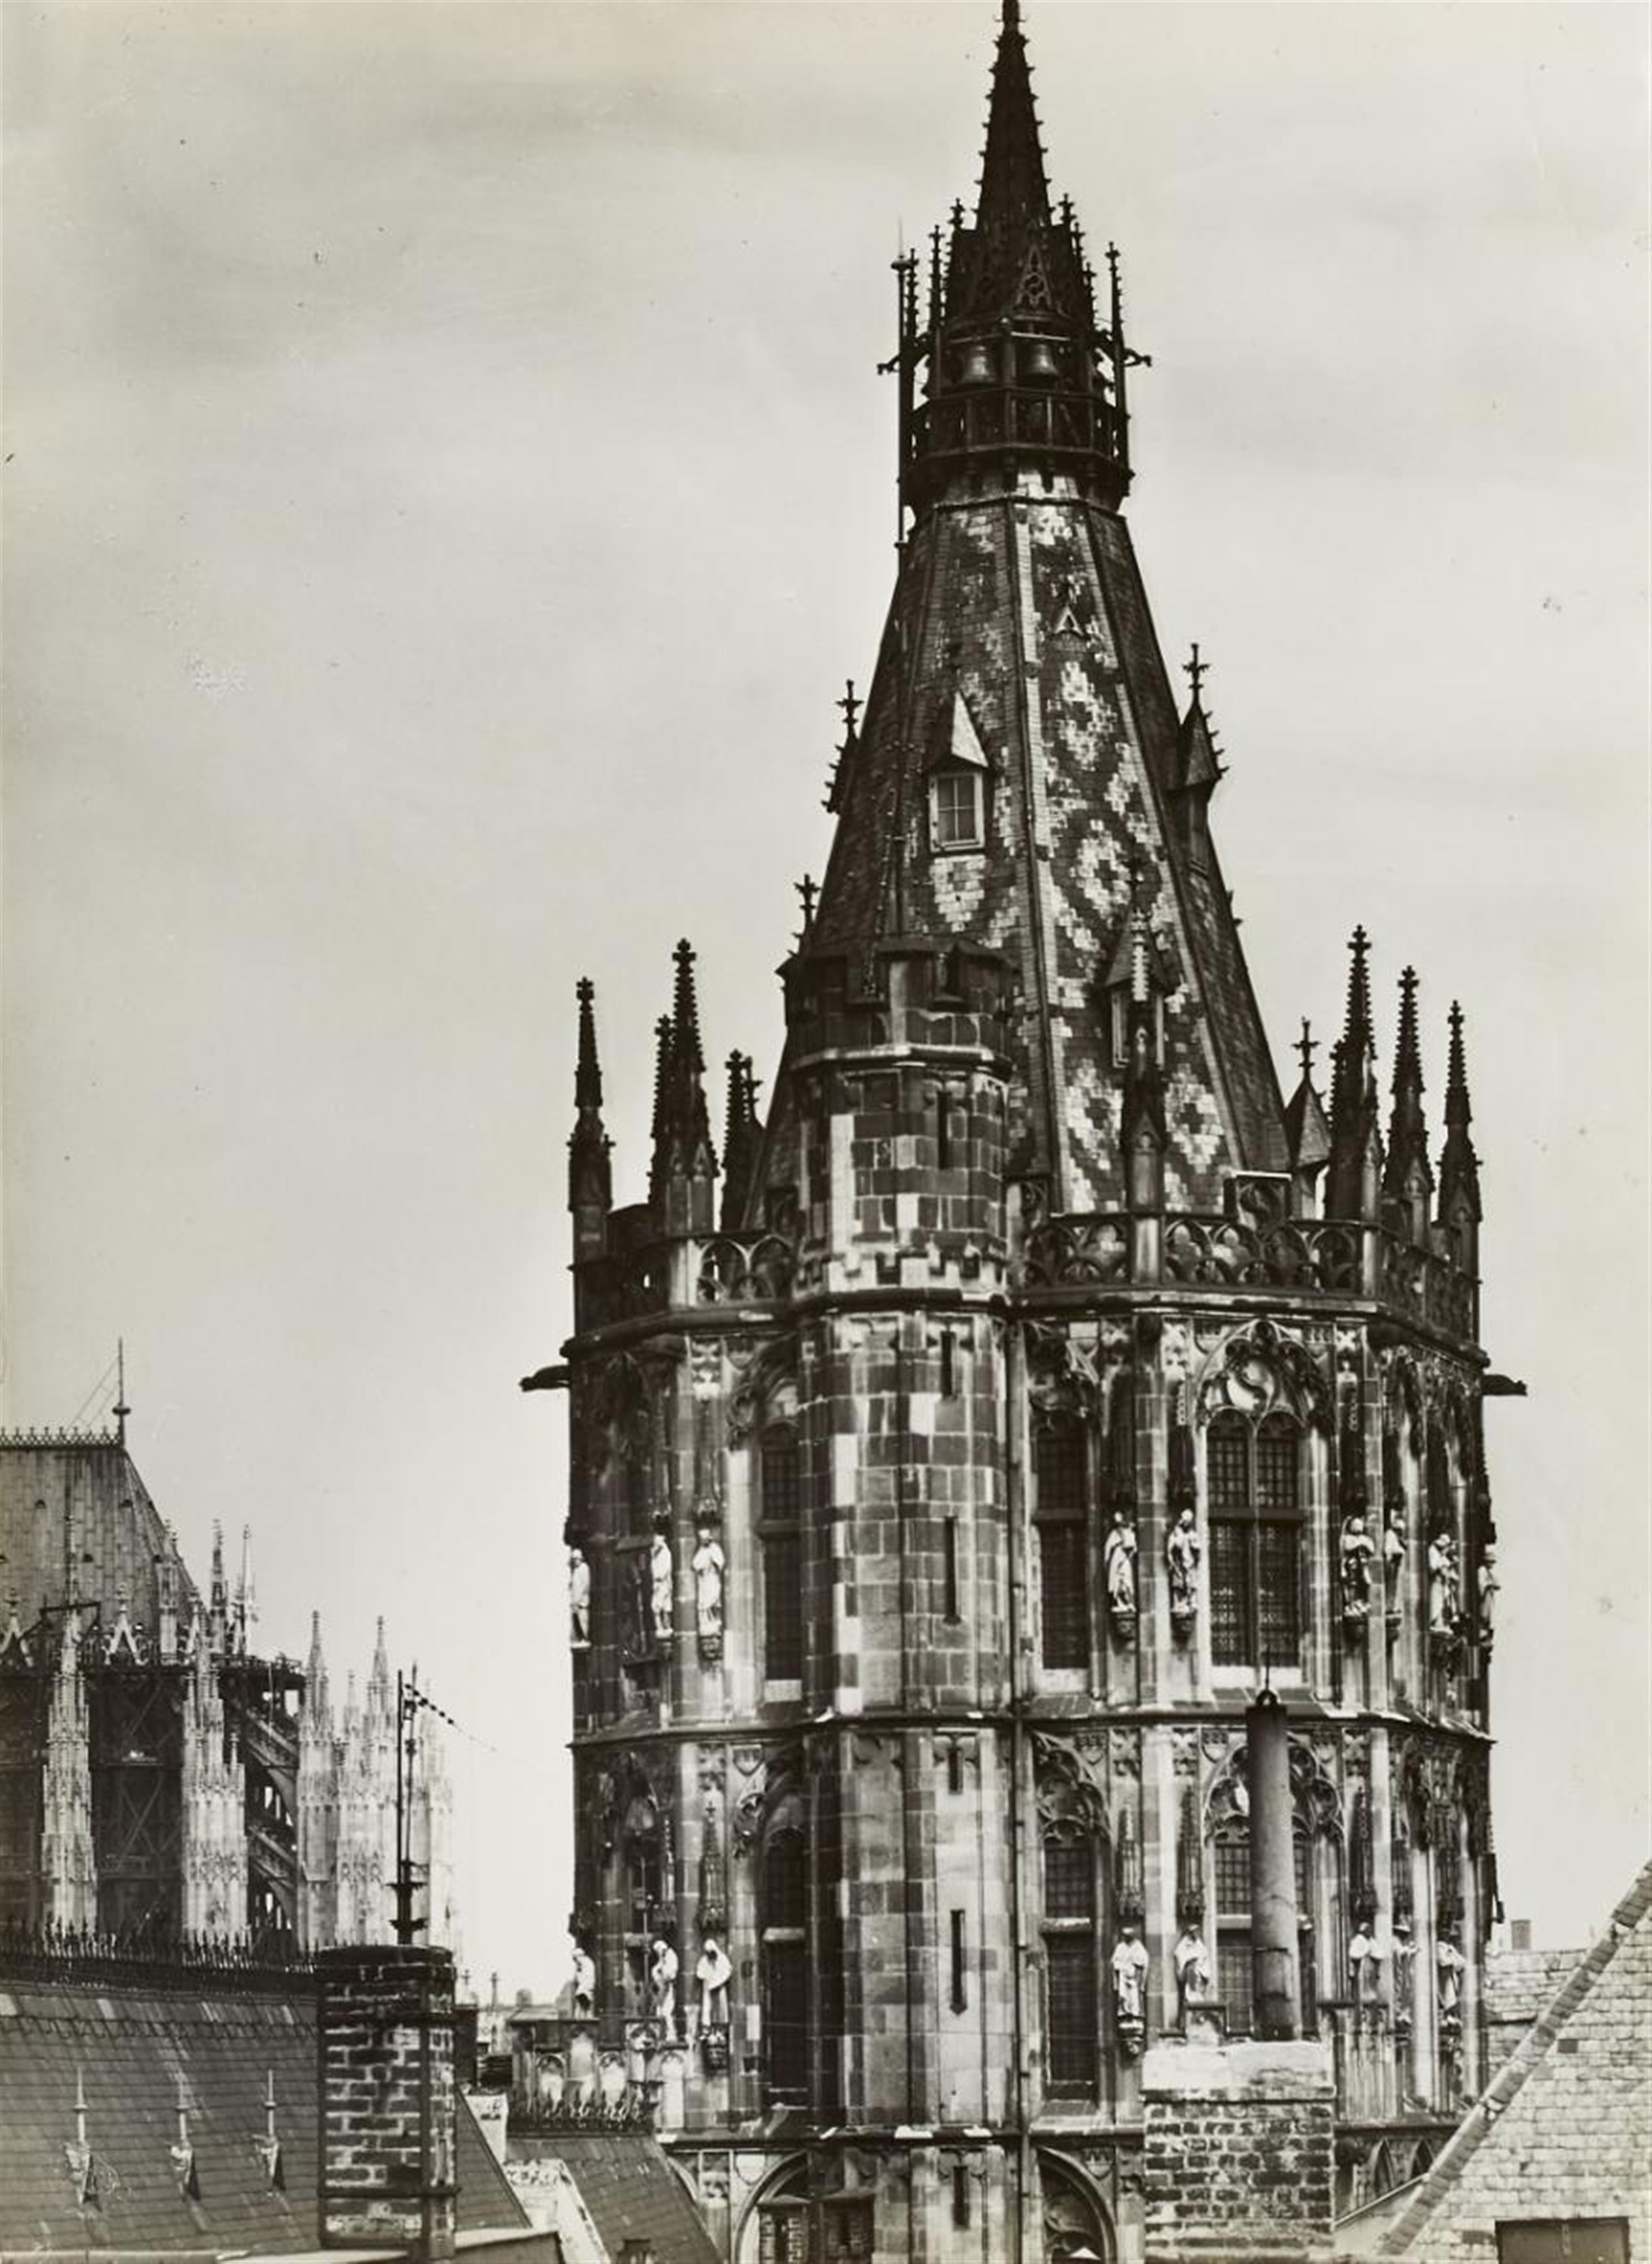 August Sander - Rathausturm (Tower of town hall) - image-1